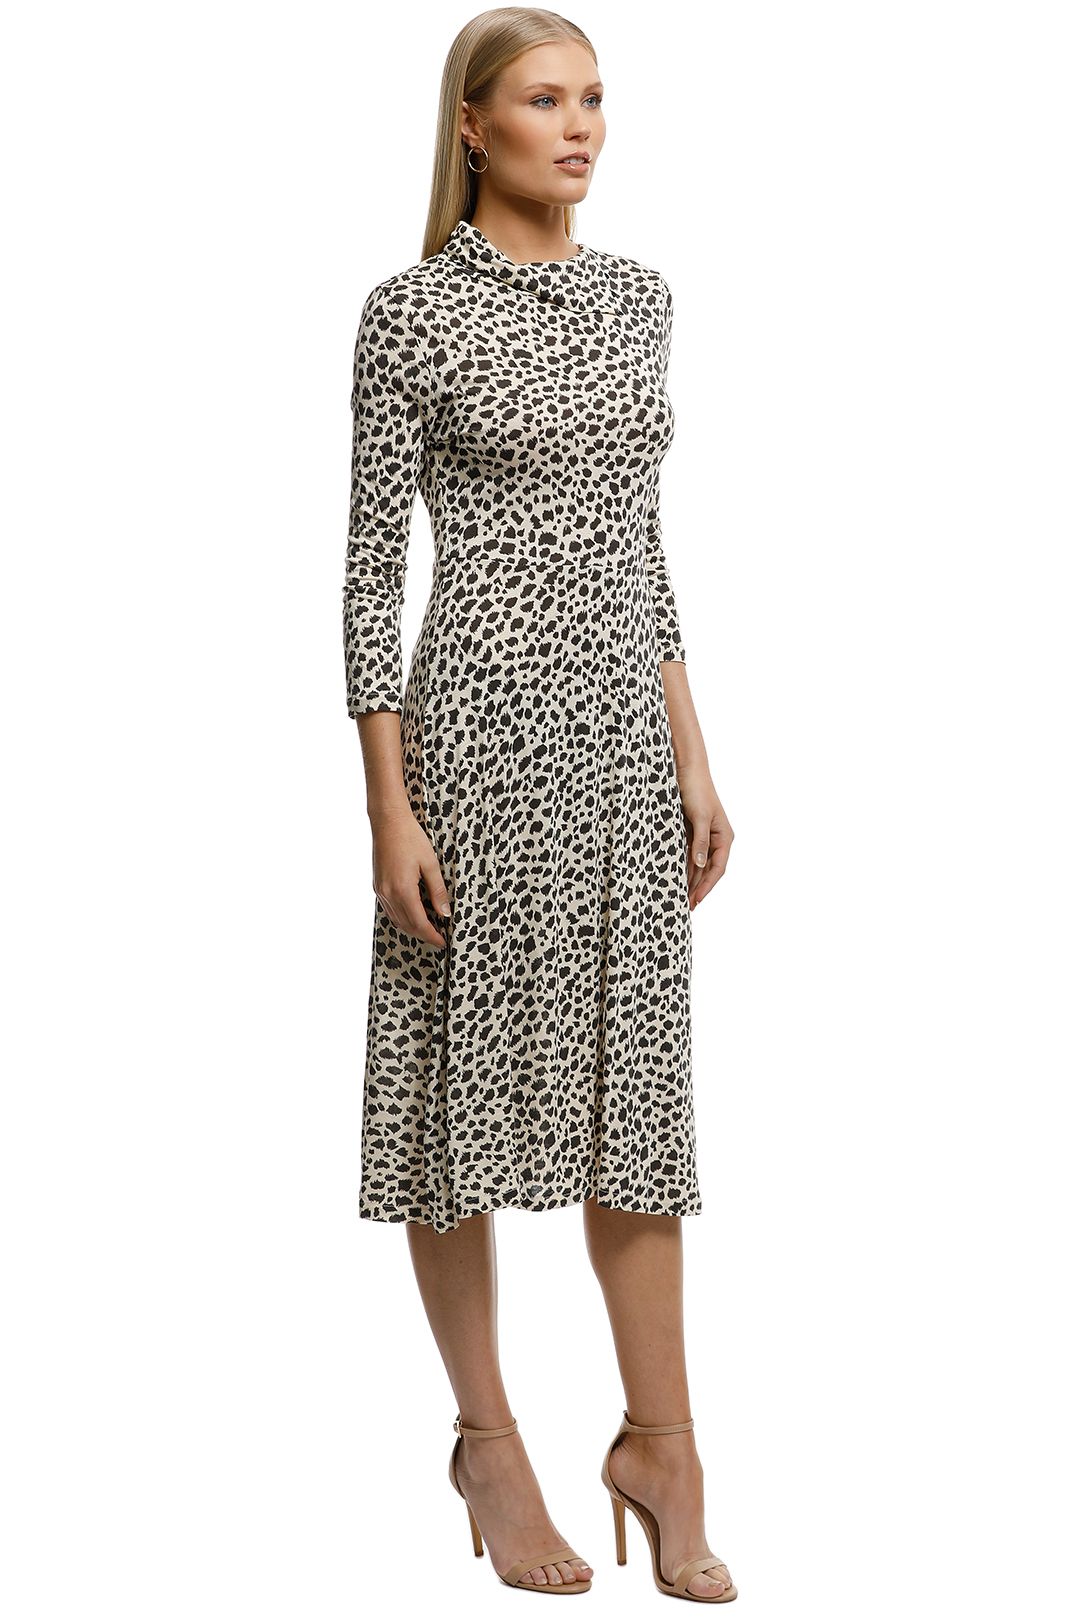 MNG - Animal Print Dress - Brown - Leopard - Side